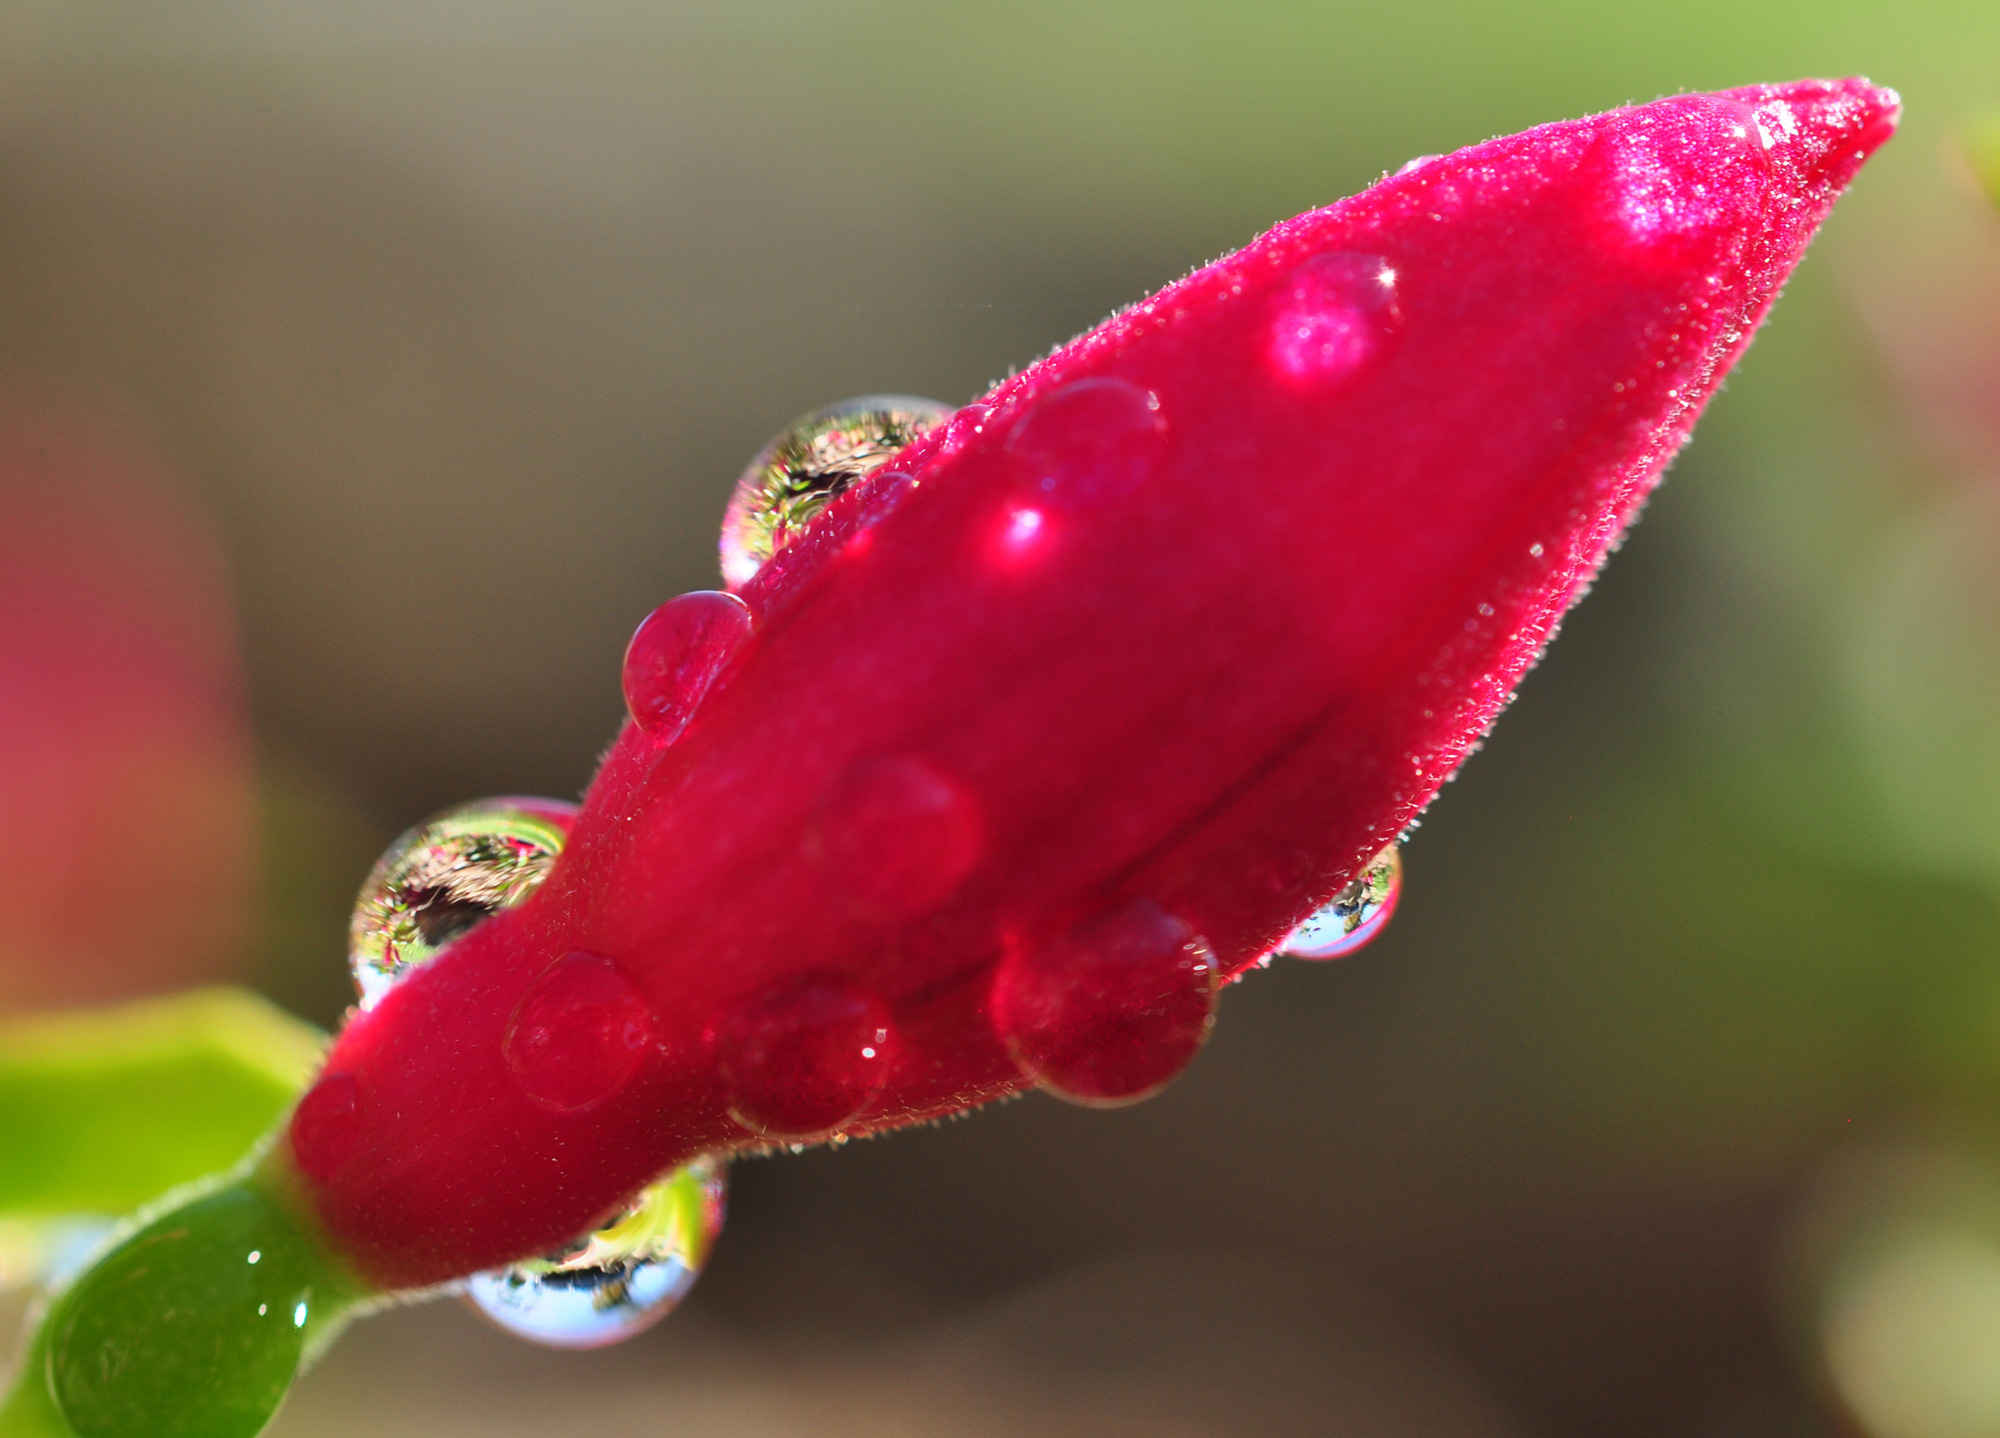 Raindrops on roses, and fuschias and frangipani